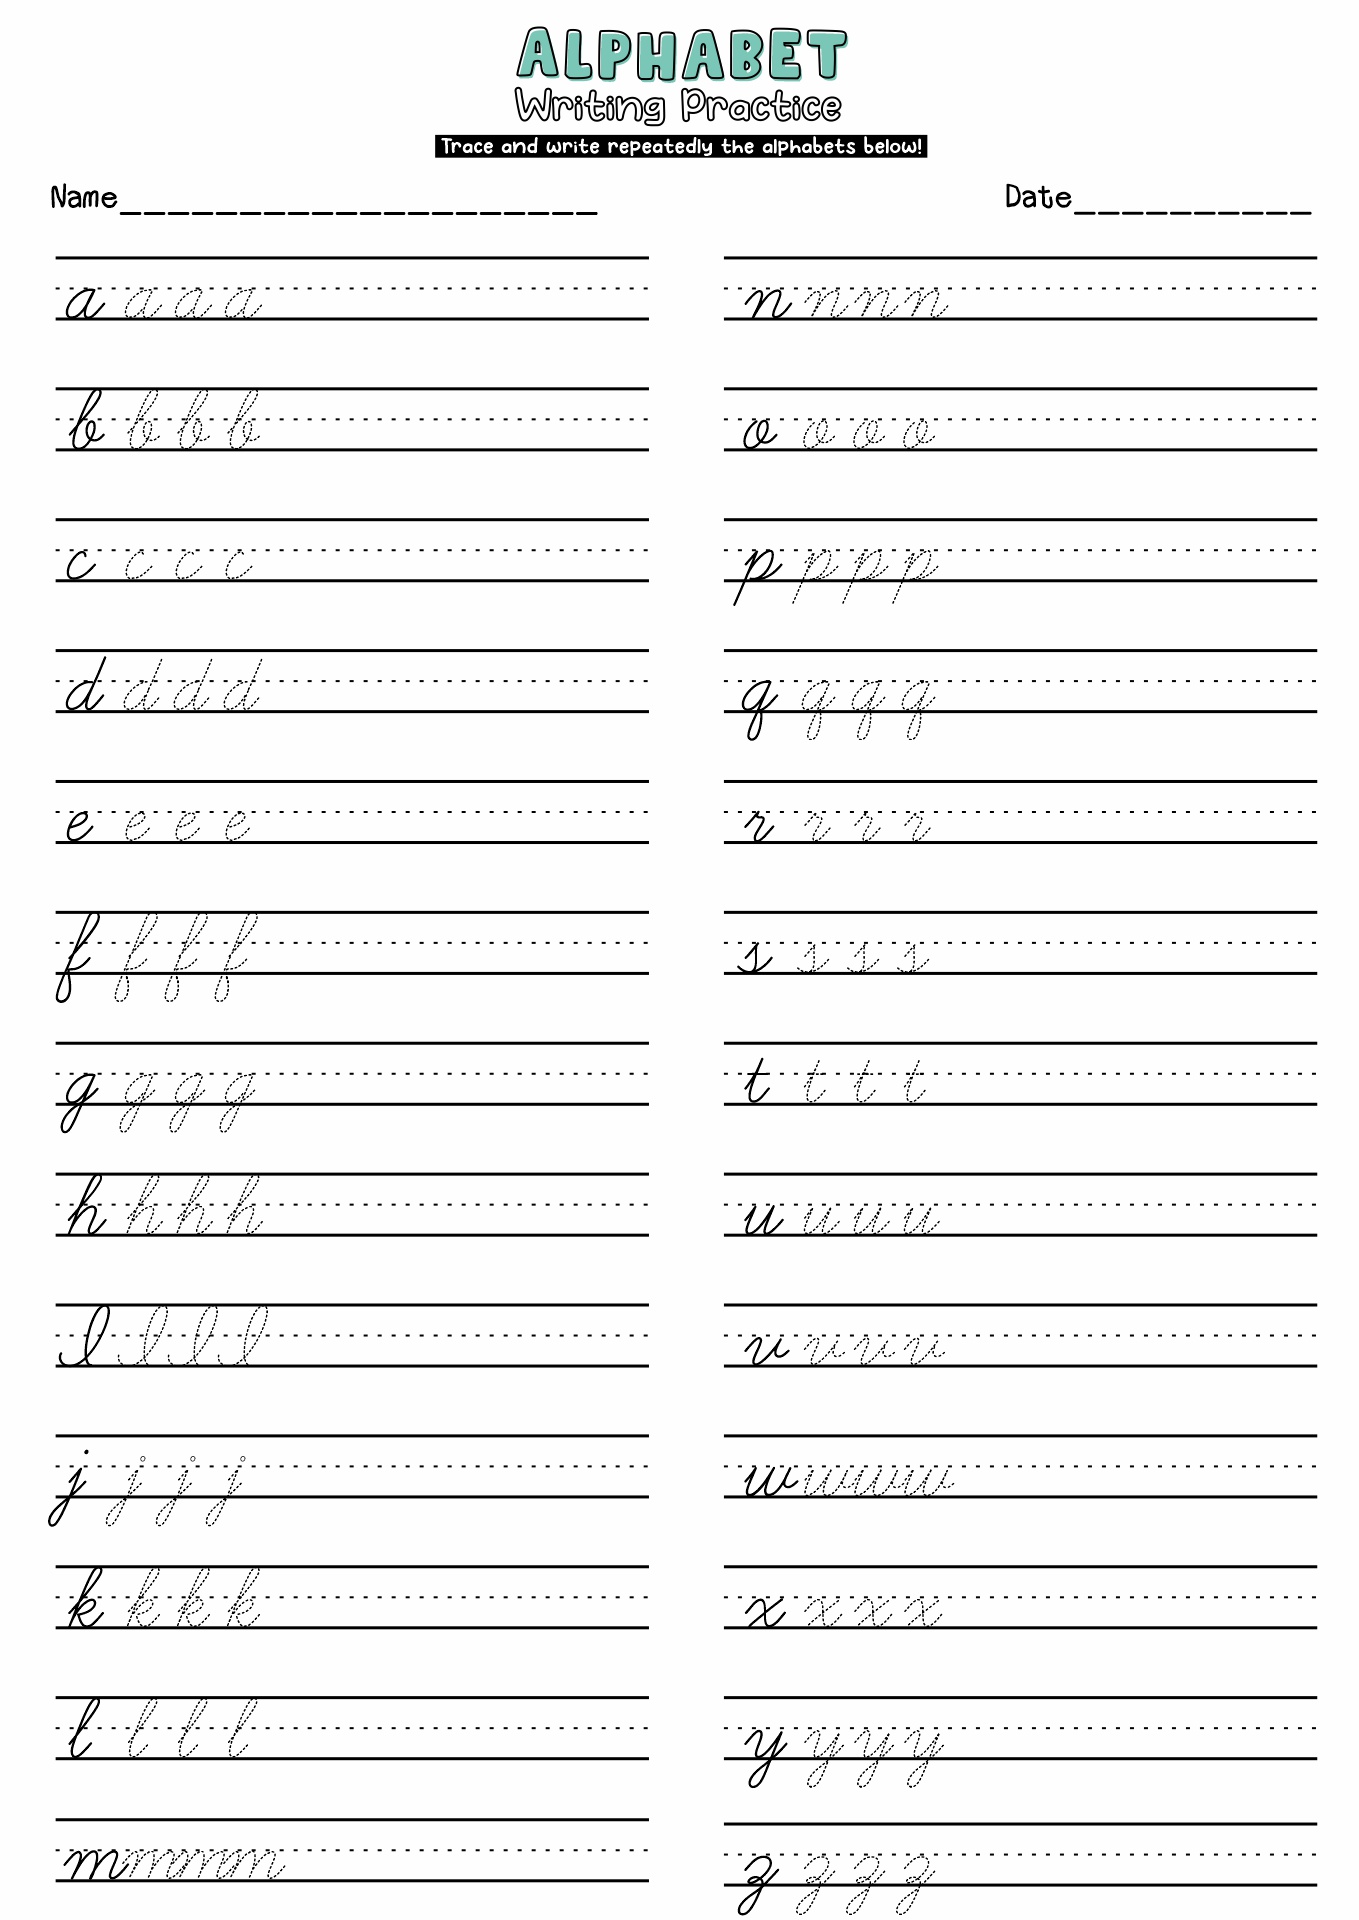 Alphabet Handwriting Practice Worksheets Image